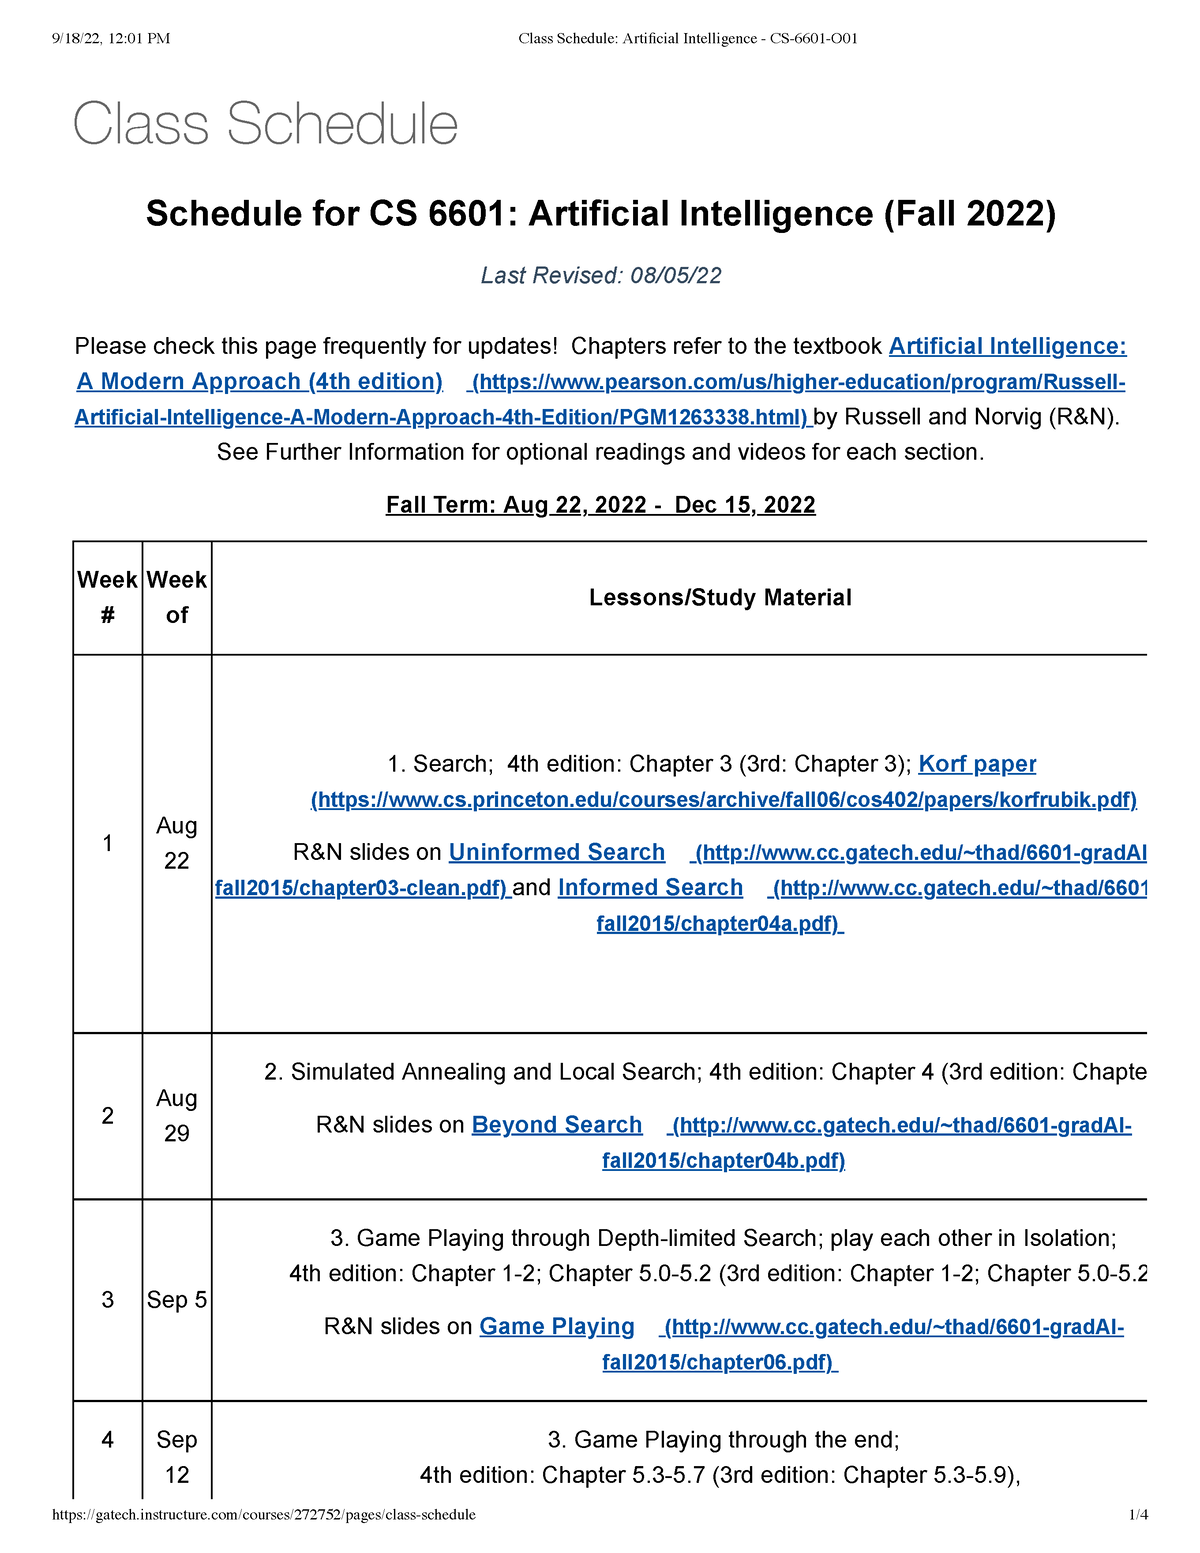 cs 6601 artificial intelligence assignments